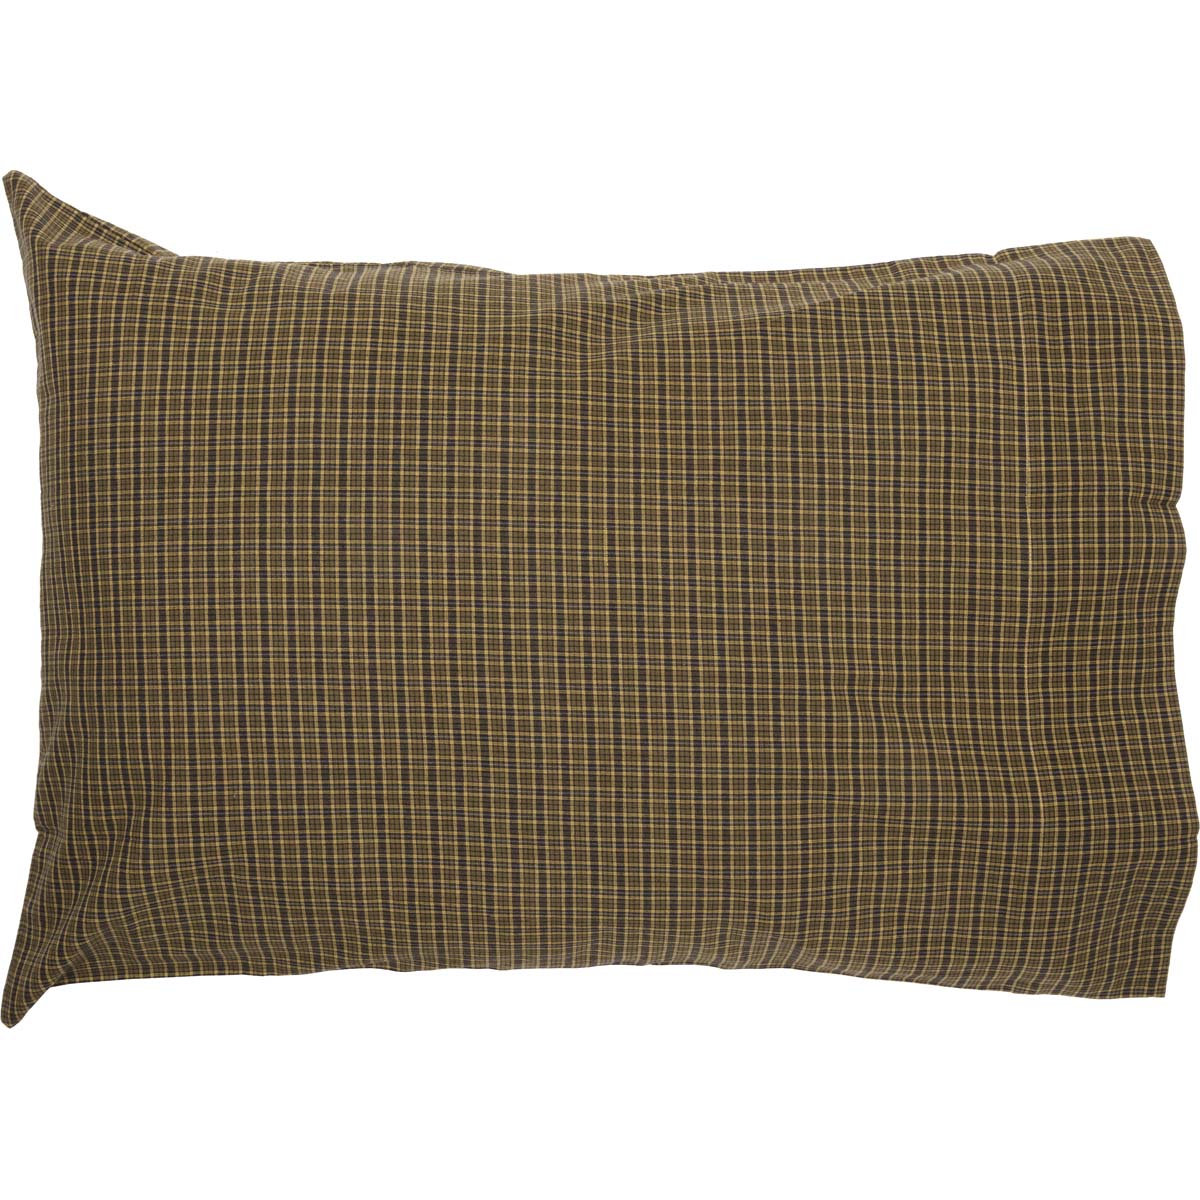 Oak & Asher Tea Cabin Green Plaid Standard Pillow Case Set of 2 21x30 By VHC Brands